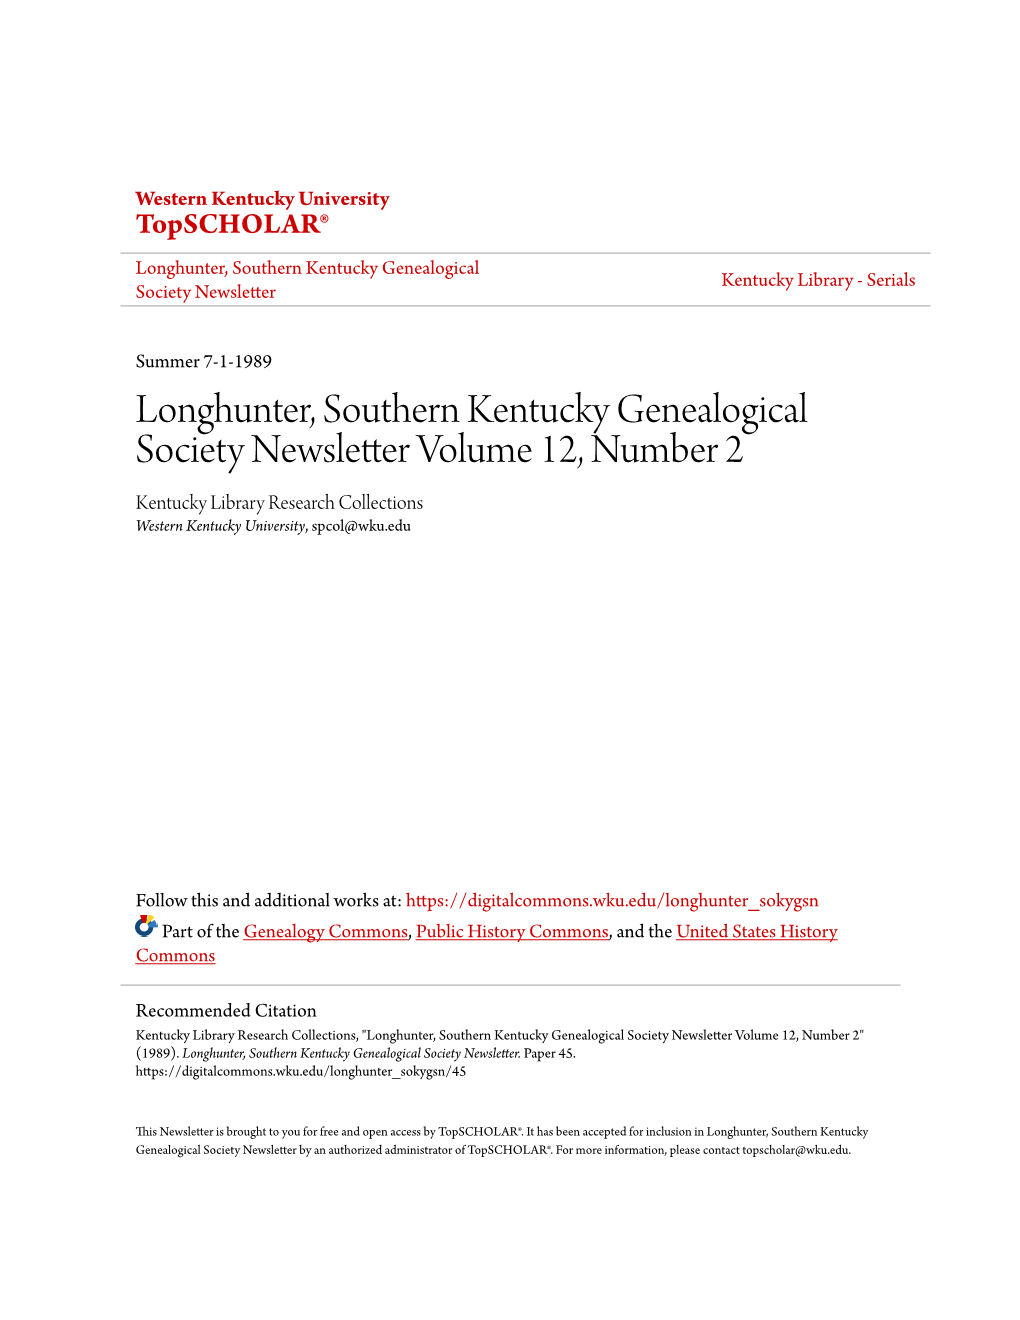 Longhunter, Southern Kentucky Genealogical Society Newsletter Volume 12, Number 2 Kentucky Library Research Collections Western Kentucky University, Spcol@Wku.Edu